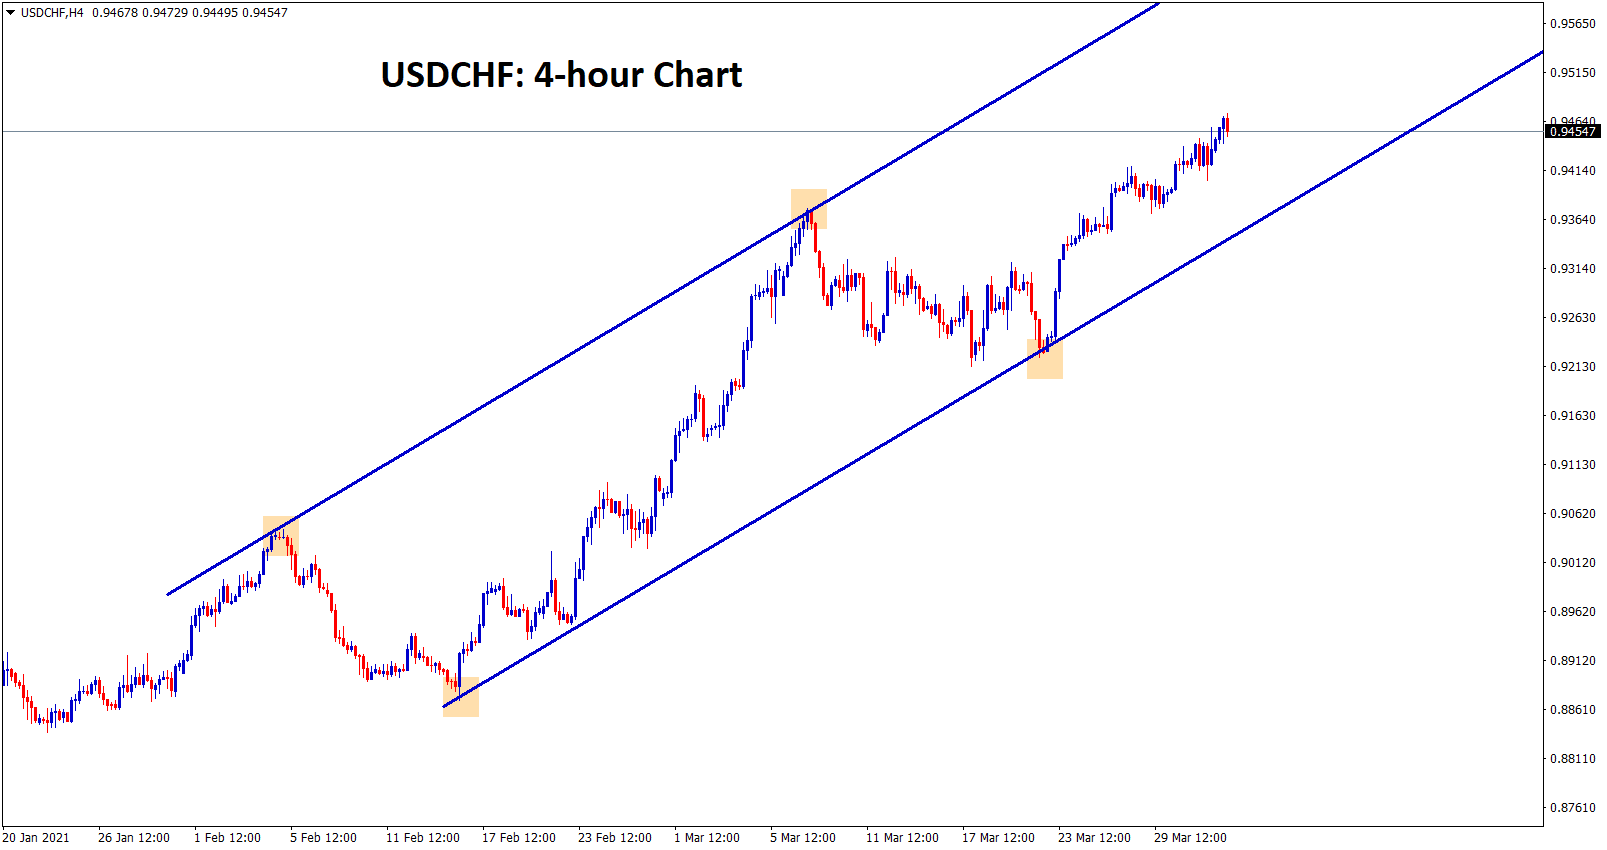 USDCHF uptrend ascending channel